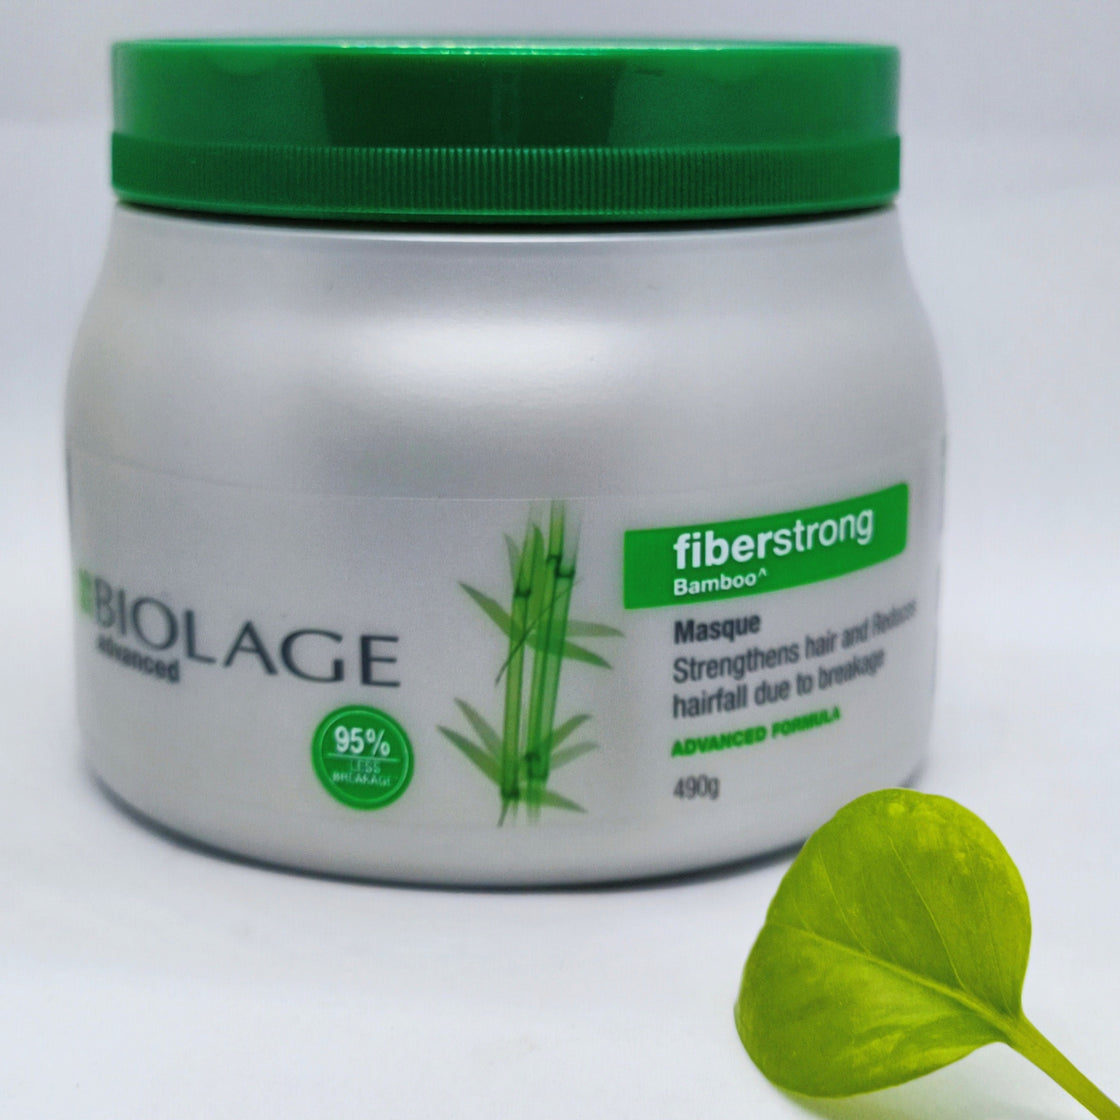 Matrix Biolage Advanced Fiberstrong Bamboo Masque (490gm)